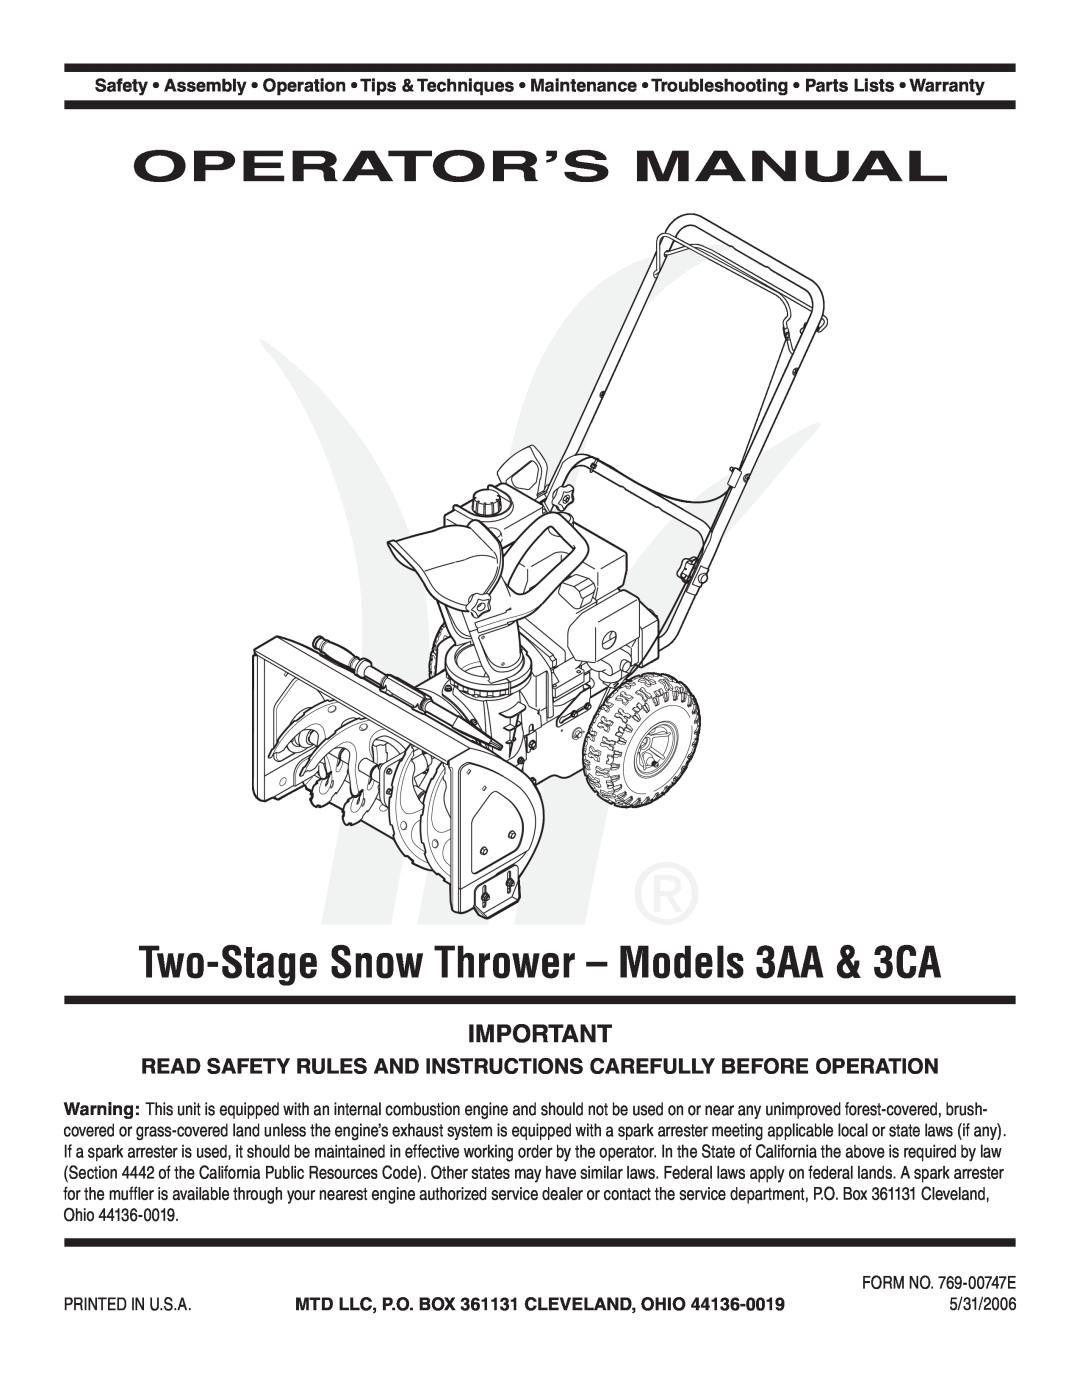 MTD warranty Operator’S Manual, Two-Stage Snow Thrower - Models 3AA & 3CA, MTD LLC, P.O. BOX 361131 CLEVELAND, OHIO 